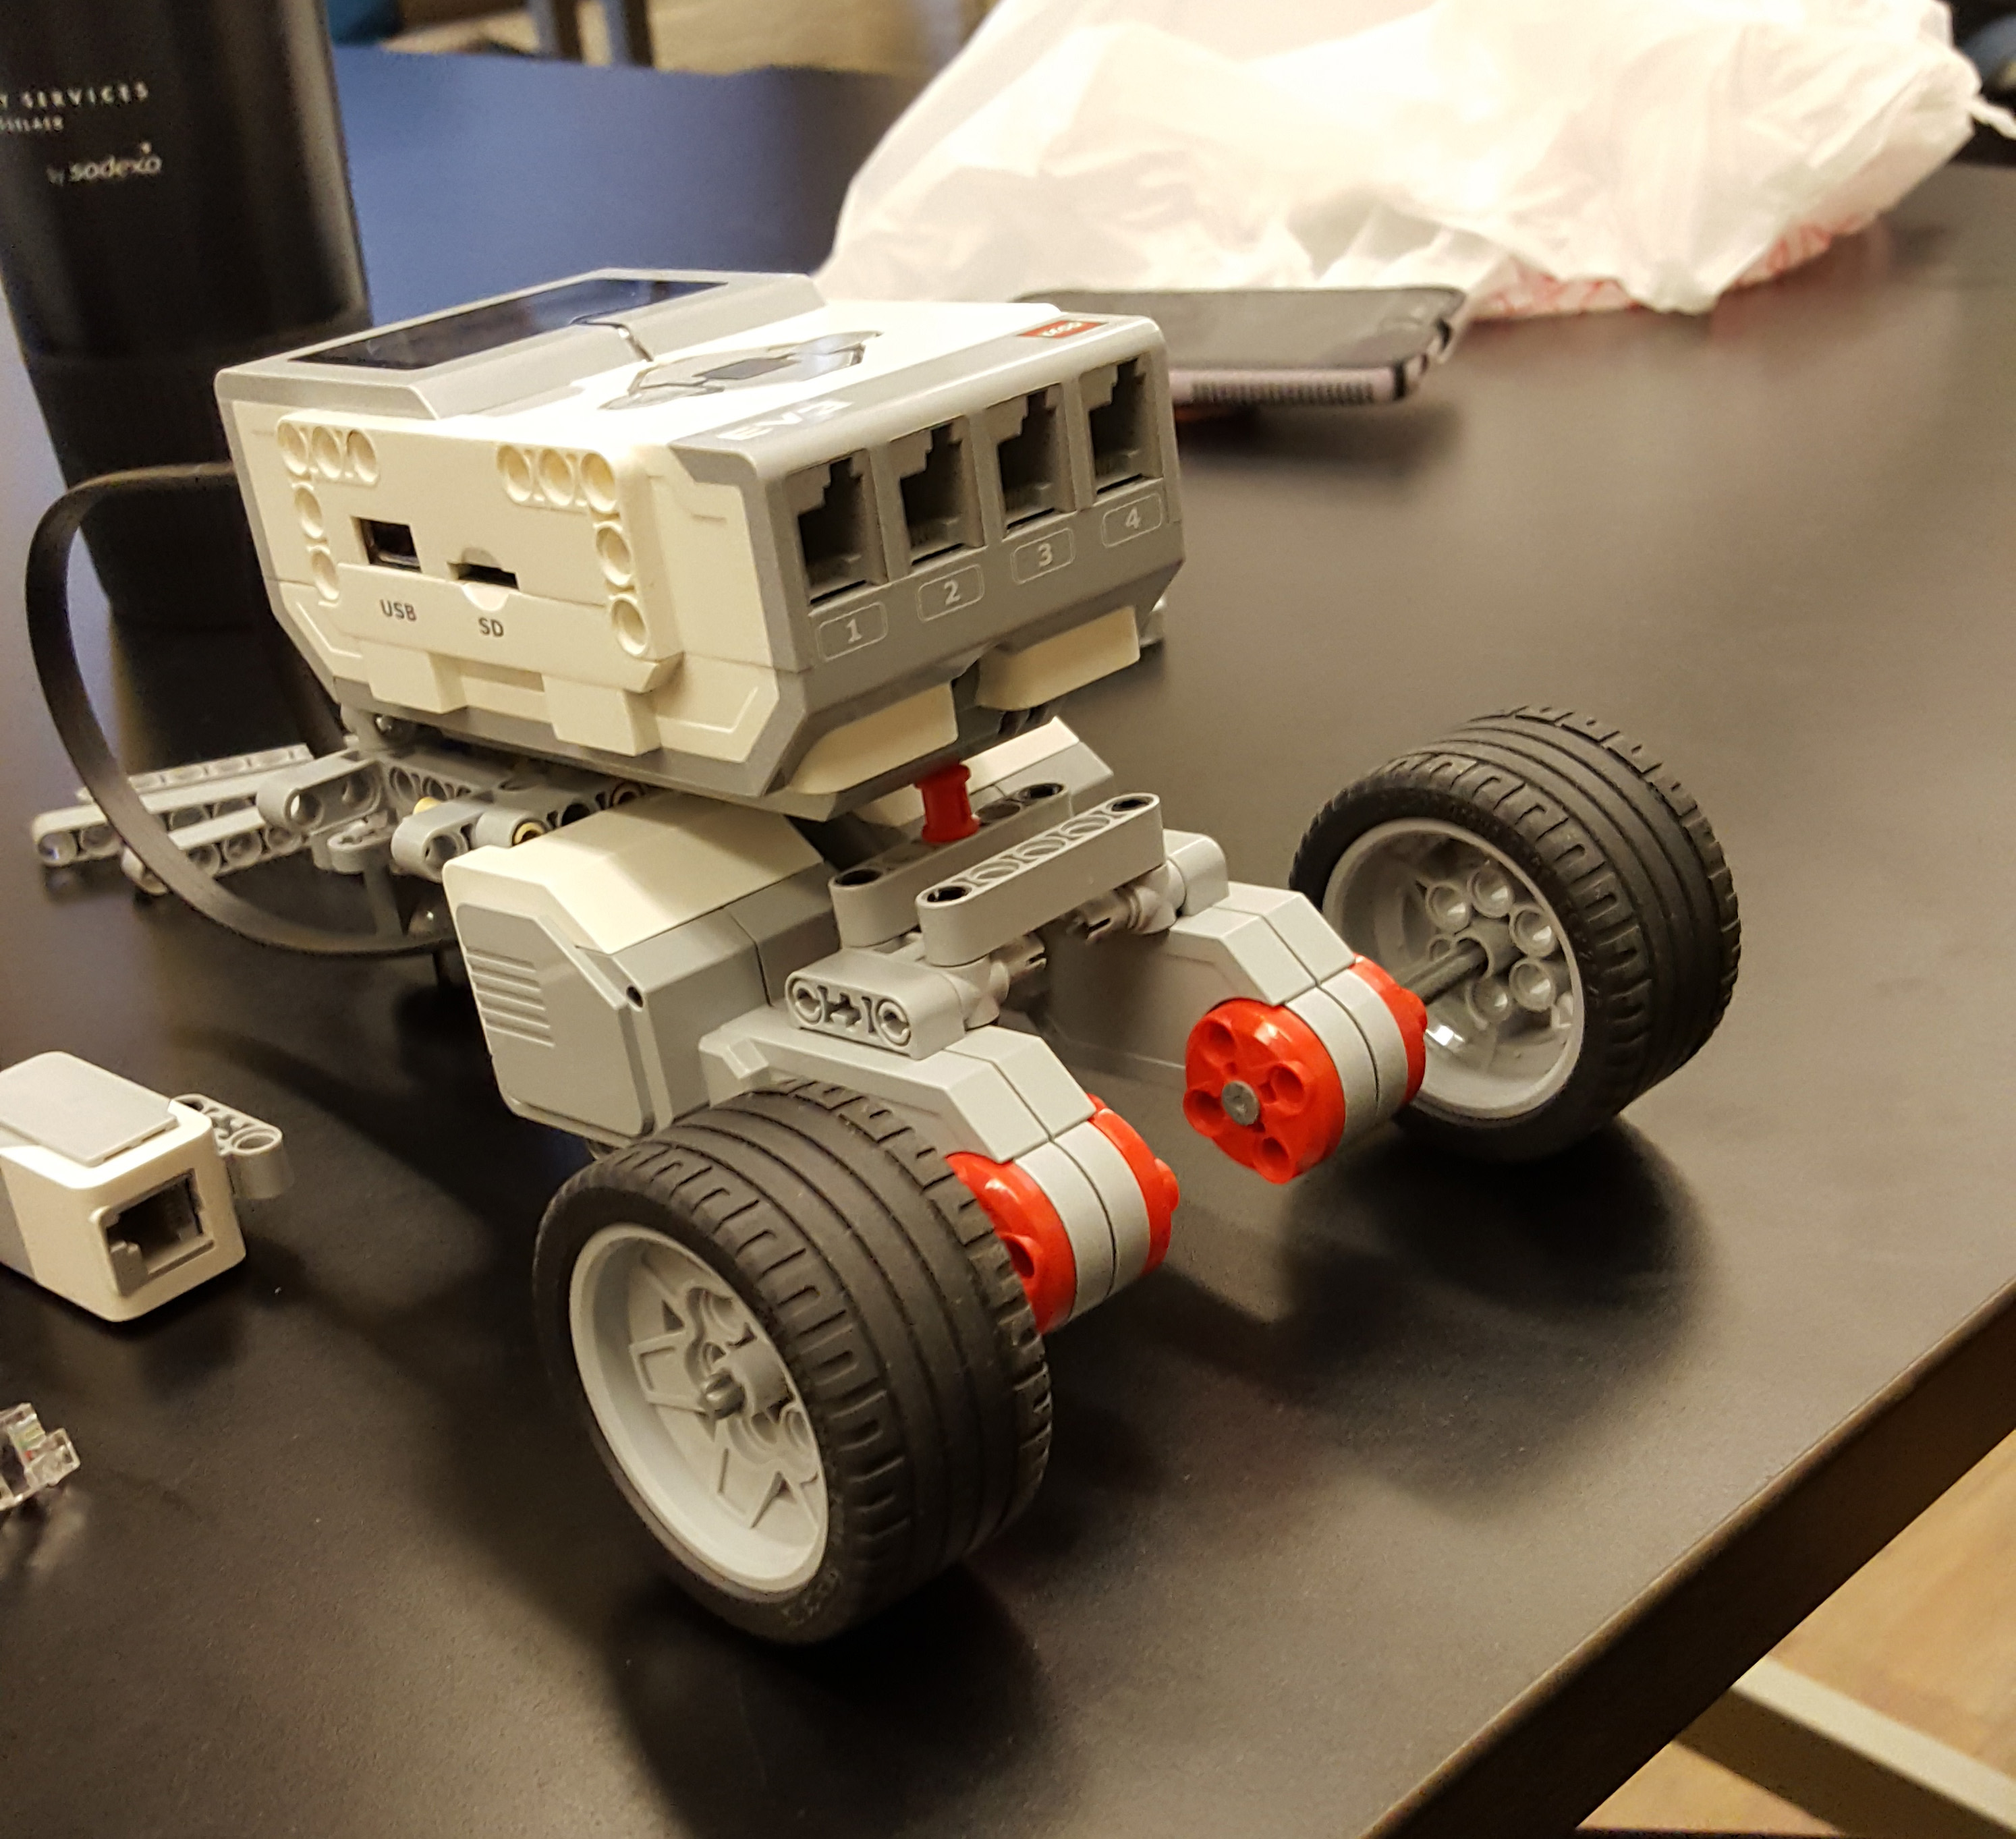 The leggo robot, his name is saggy boi (he was better programmed than built)